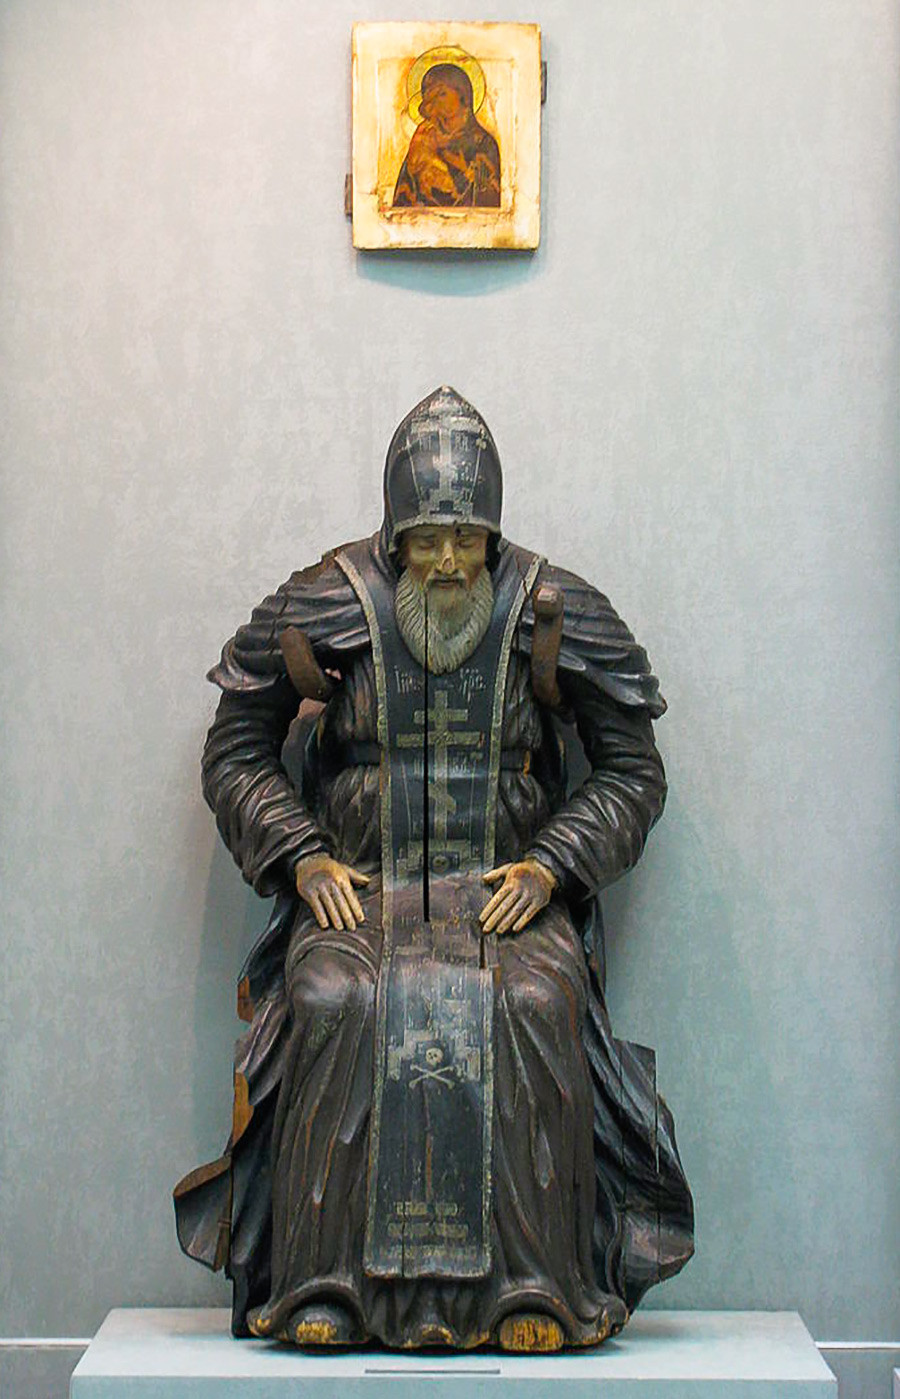 The 17th-century wooden image of Saint Nilus of Stoloben